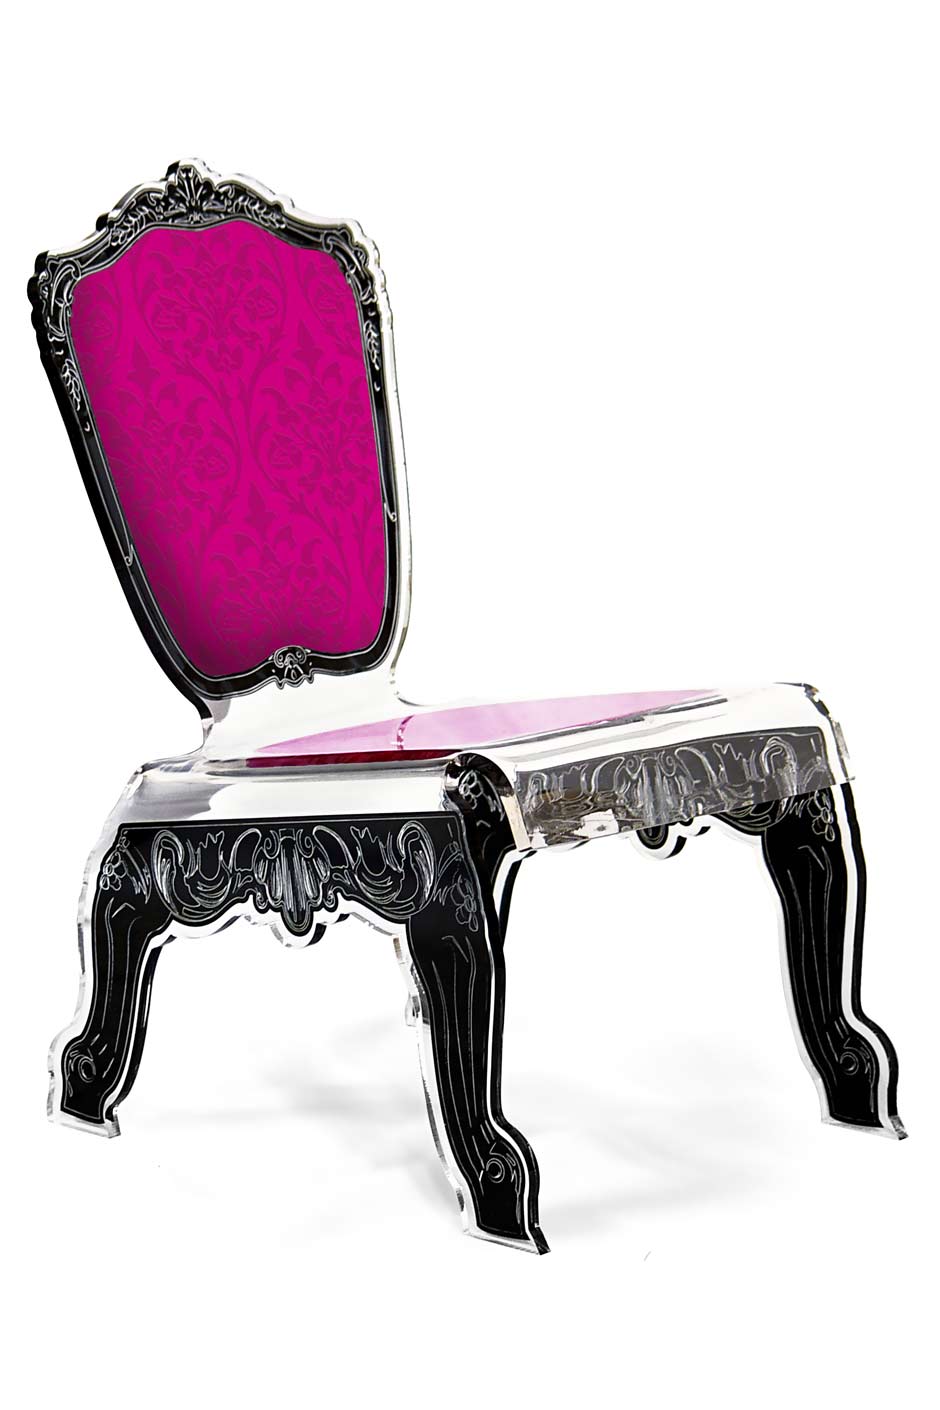 Chaise design Baroque acrylique verre forme relax motif rose fuchsia. Acrila. 